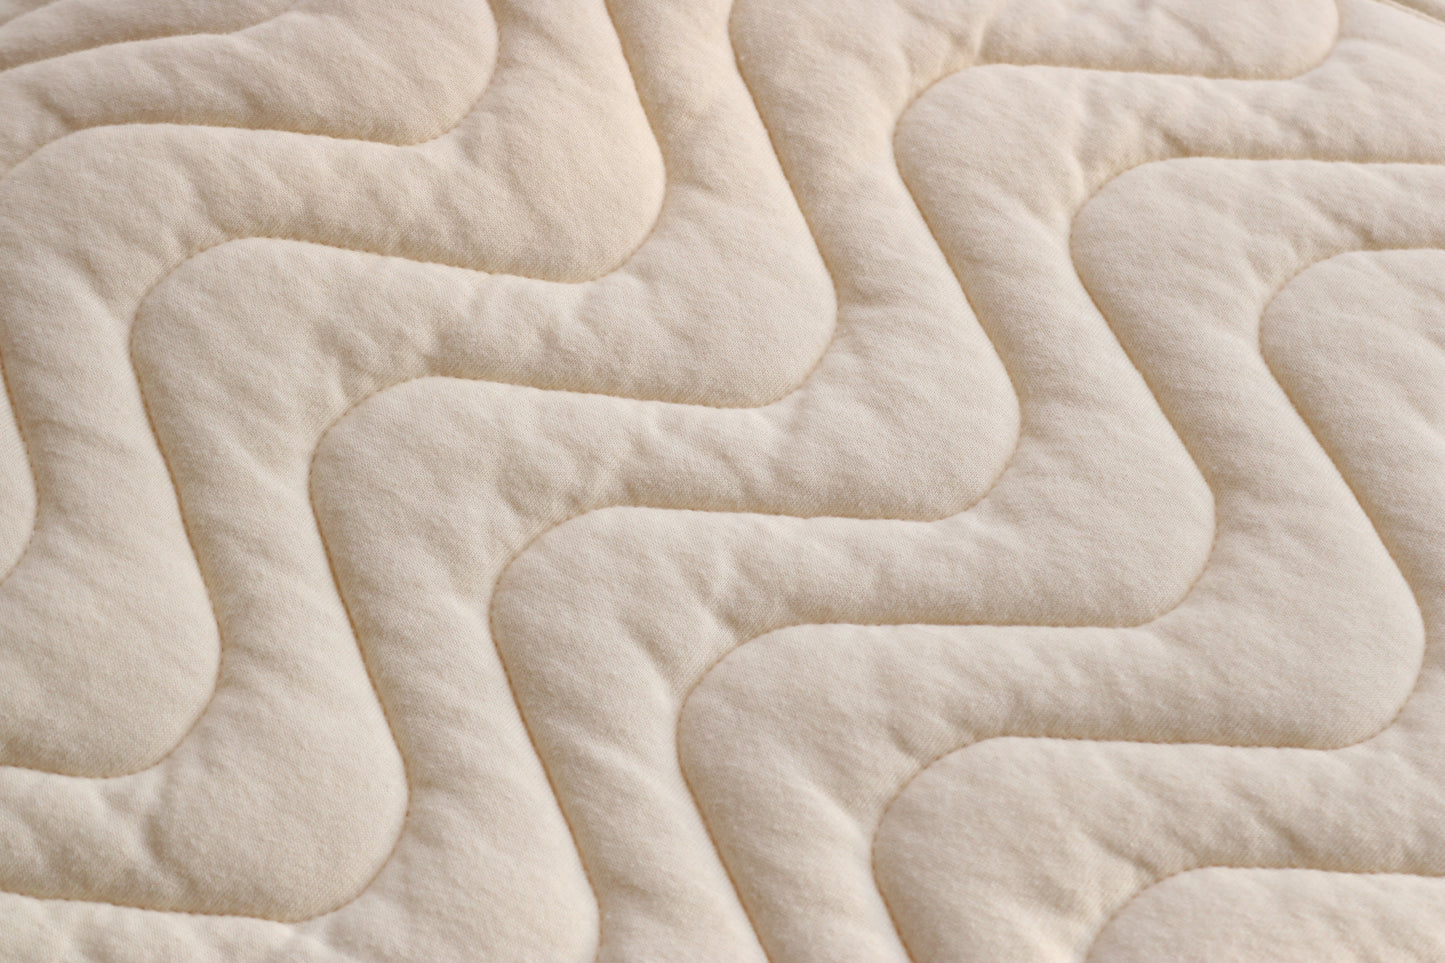 Original SOS washable wool bed pad 0.5kg